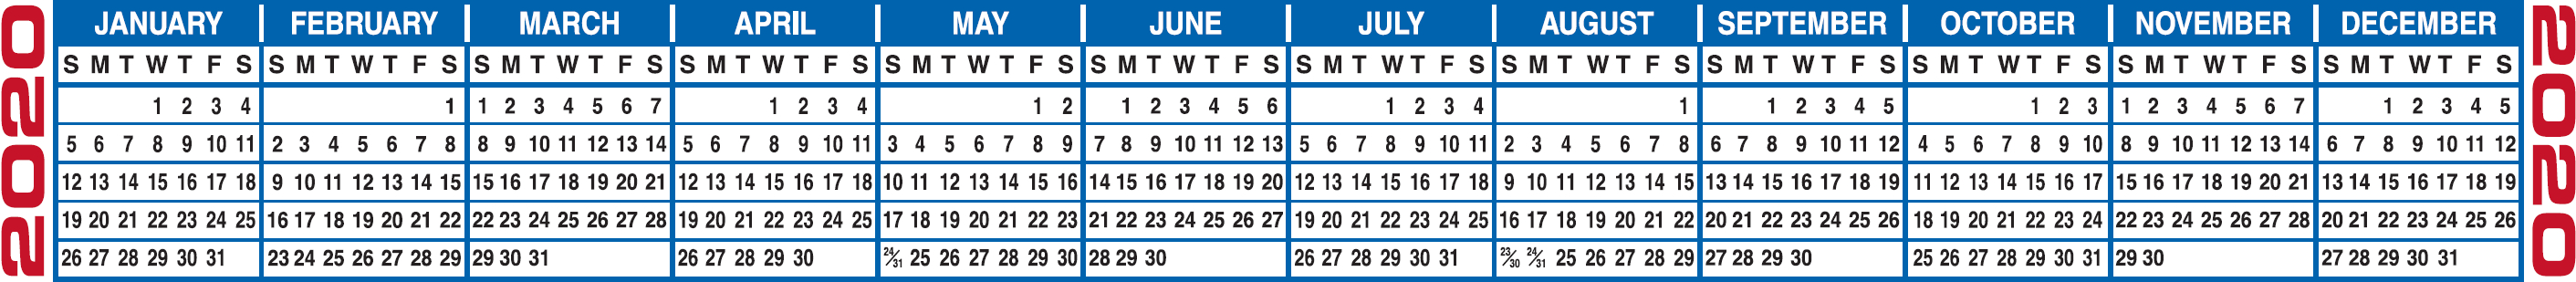 Free Printable 2020 Calendars &amp; 2020 Calendar Strips inside Keyboard Calendar Strips 2020